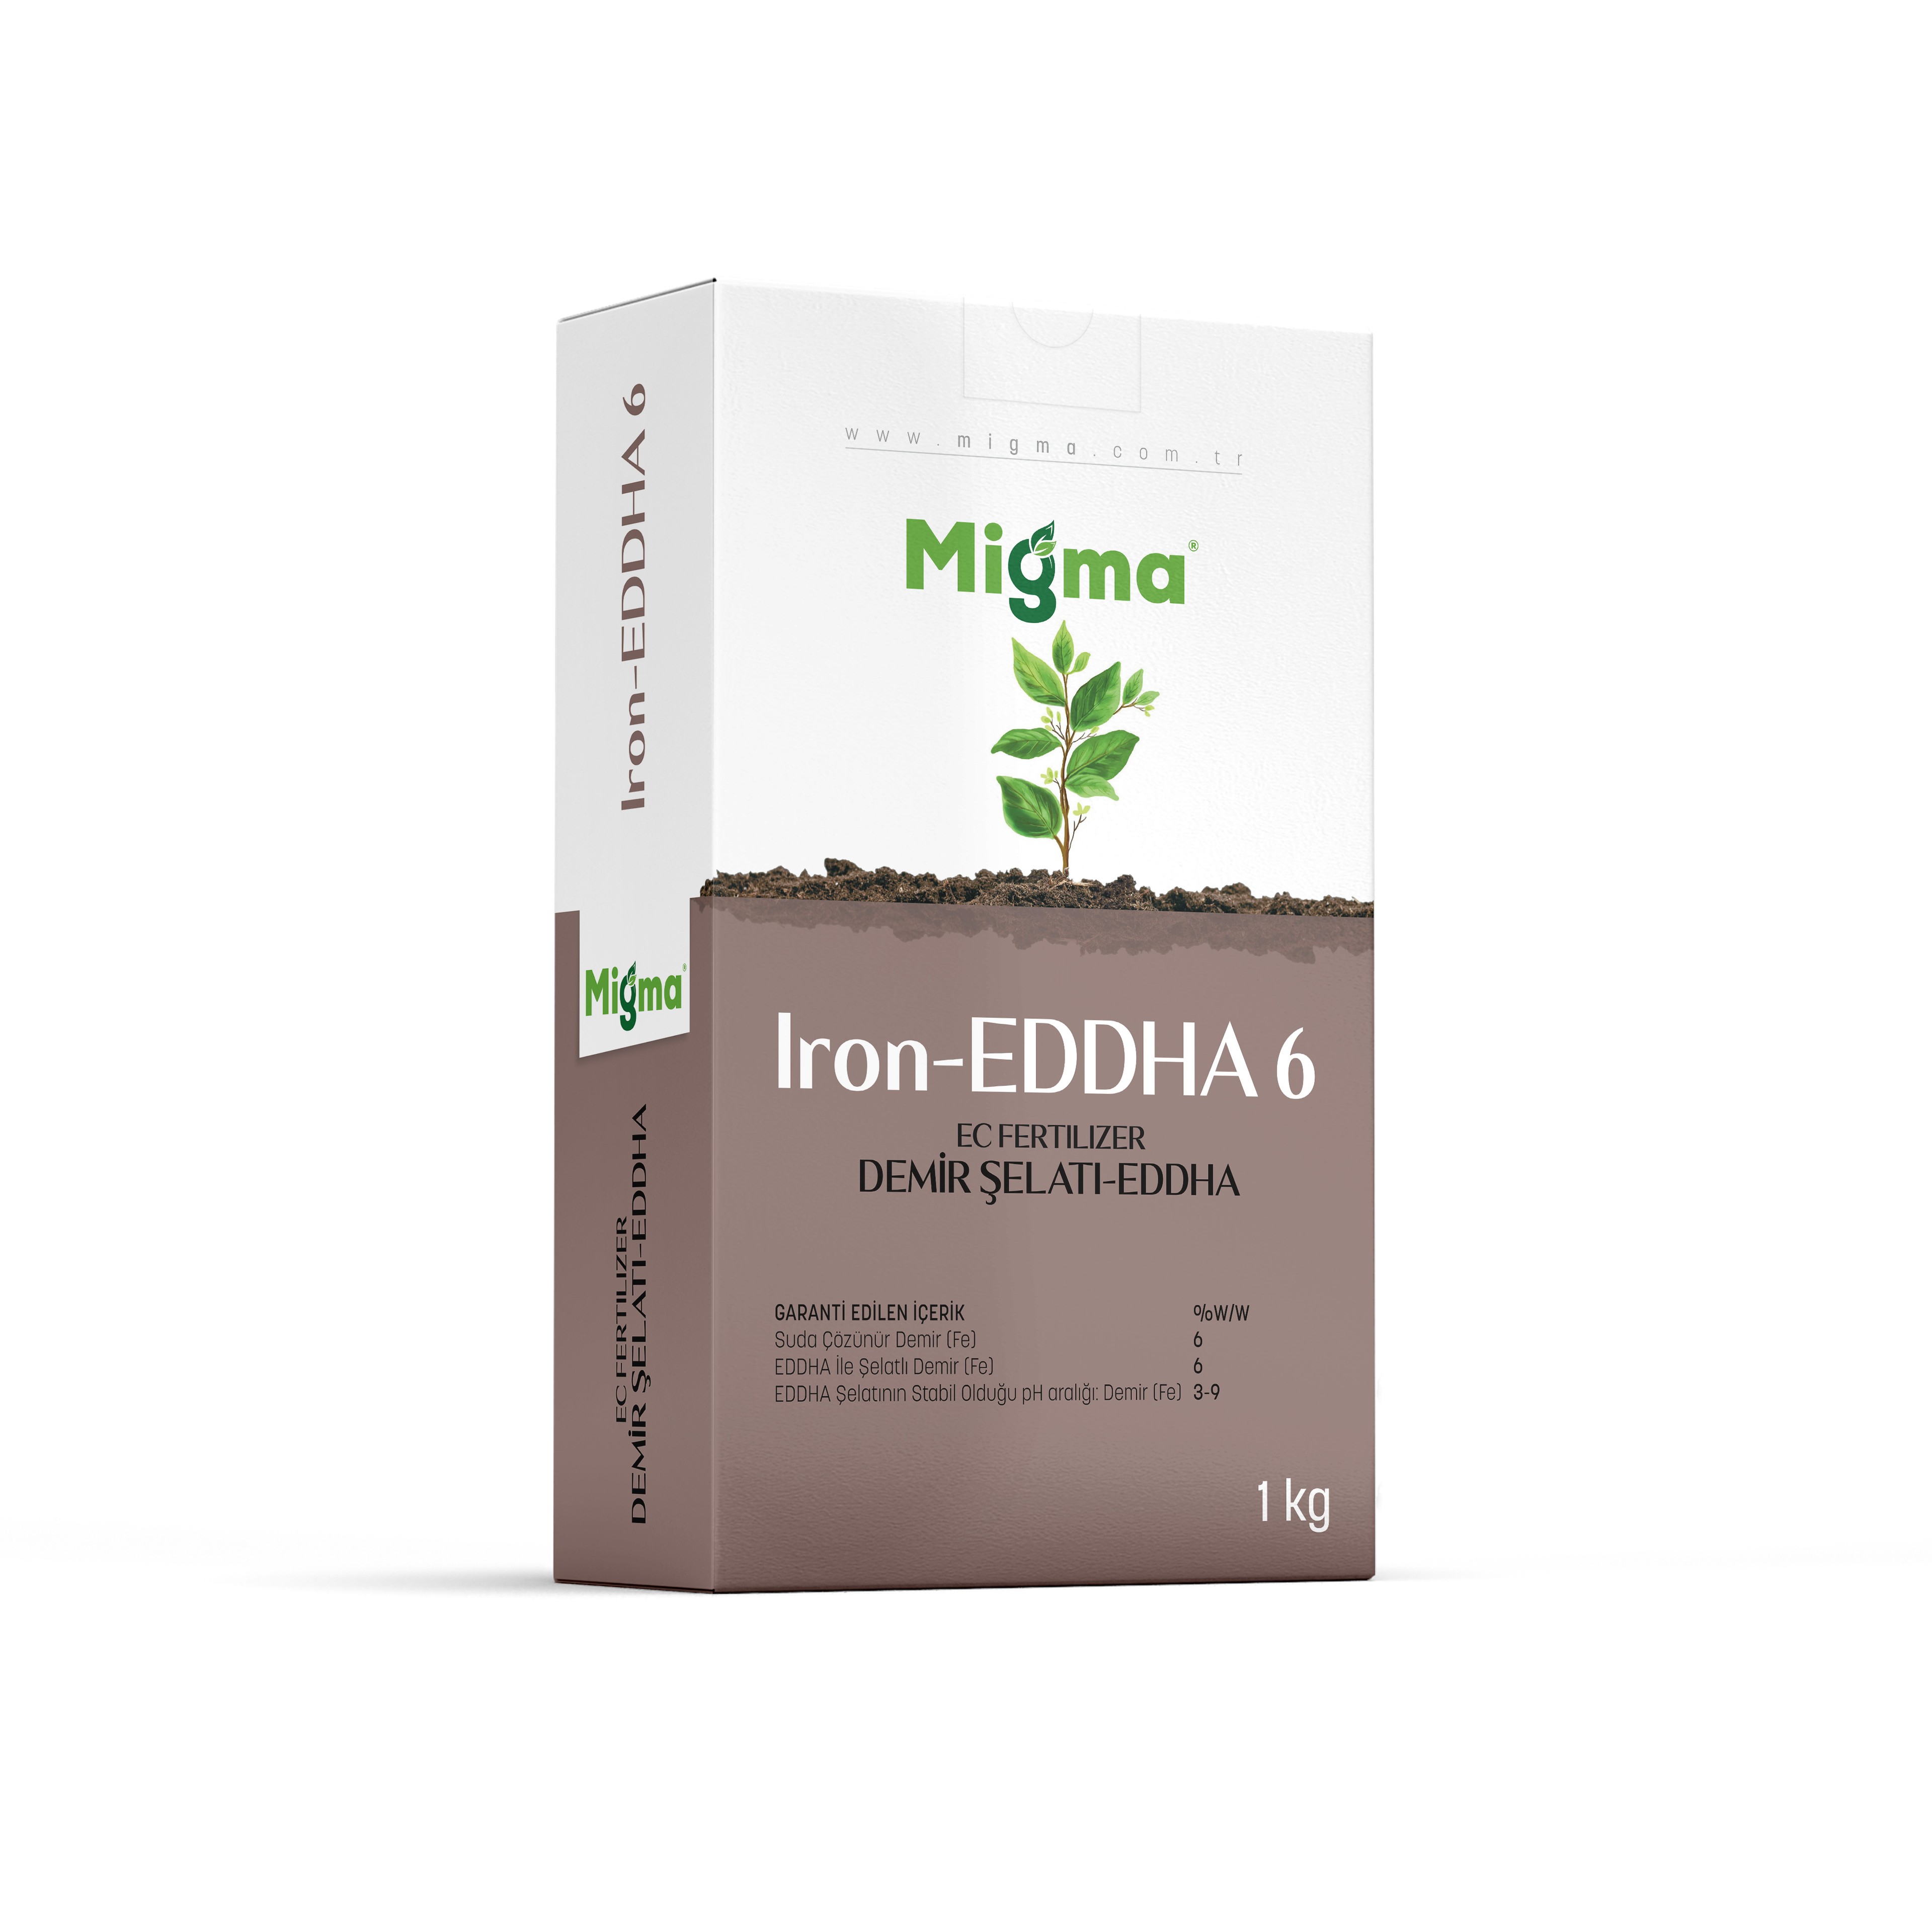 Migma Iron-EDDHA 6